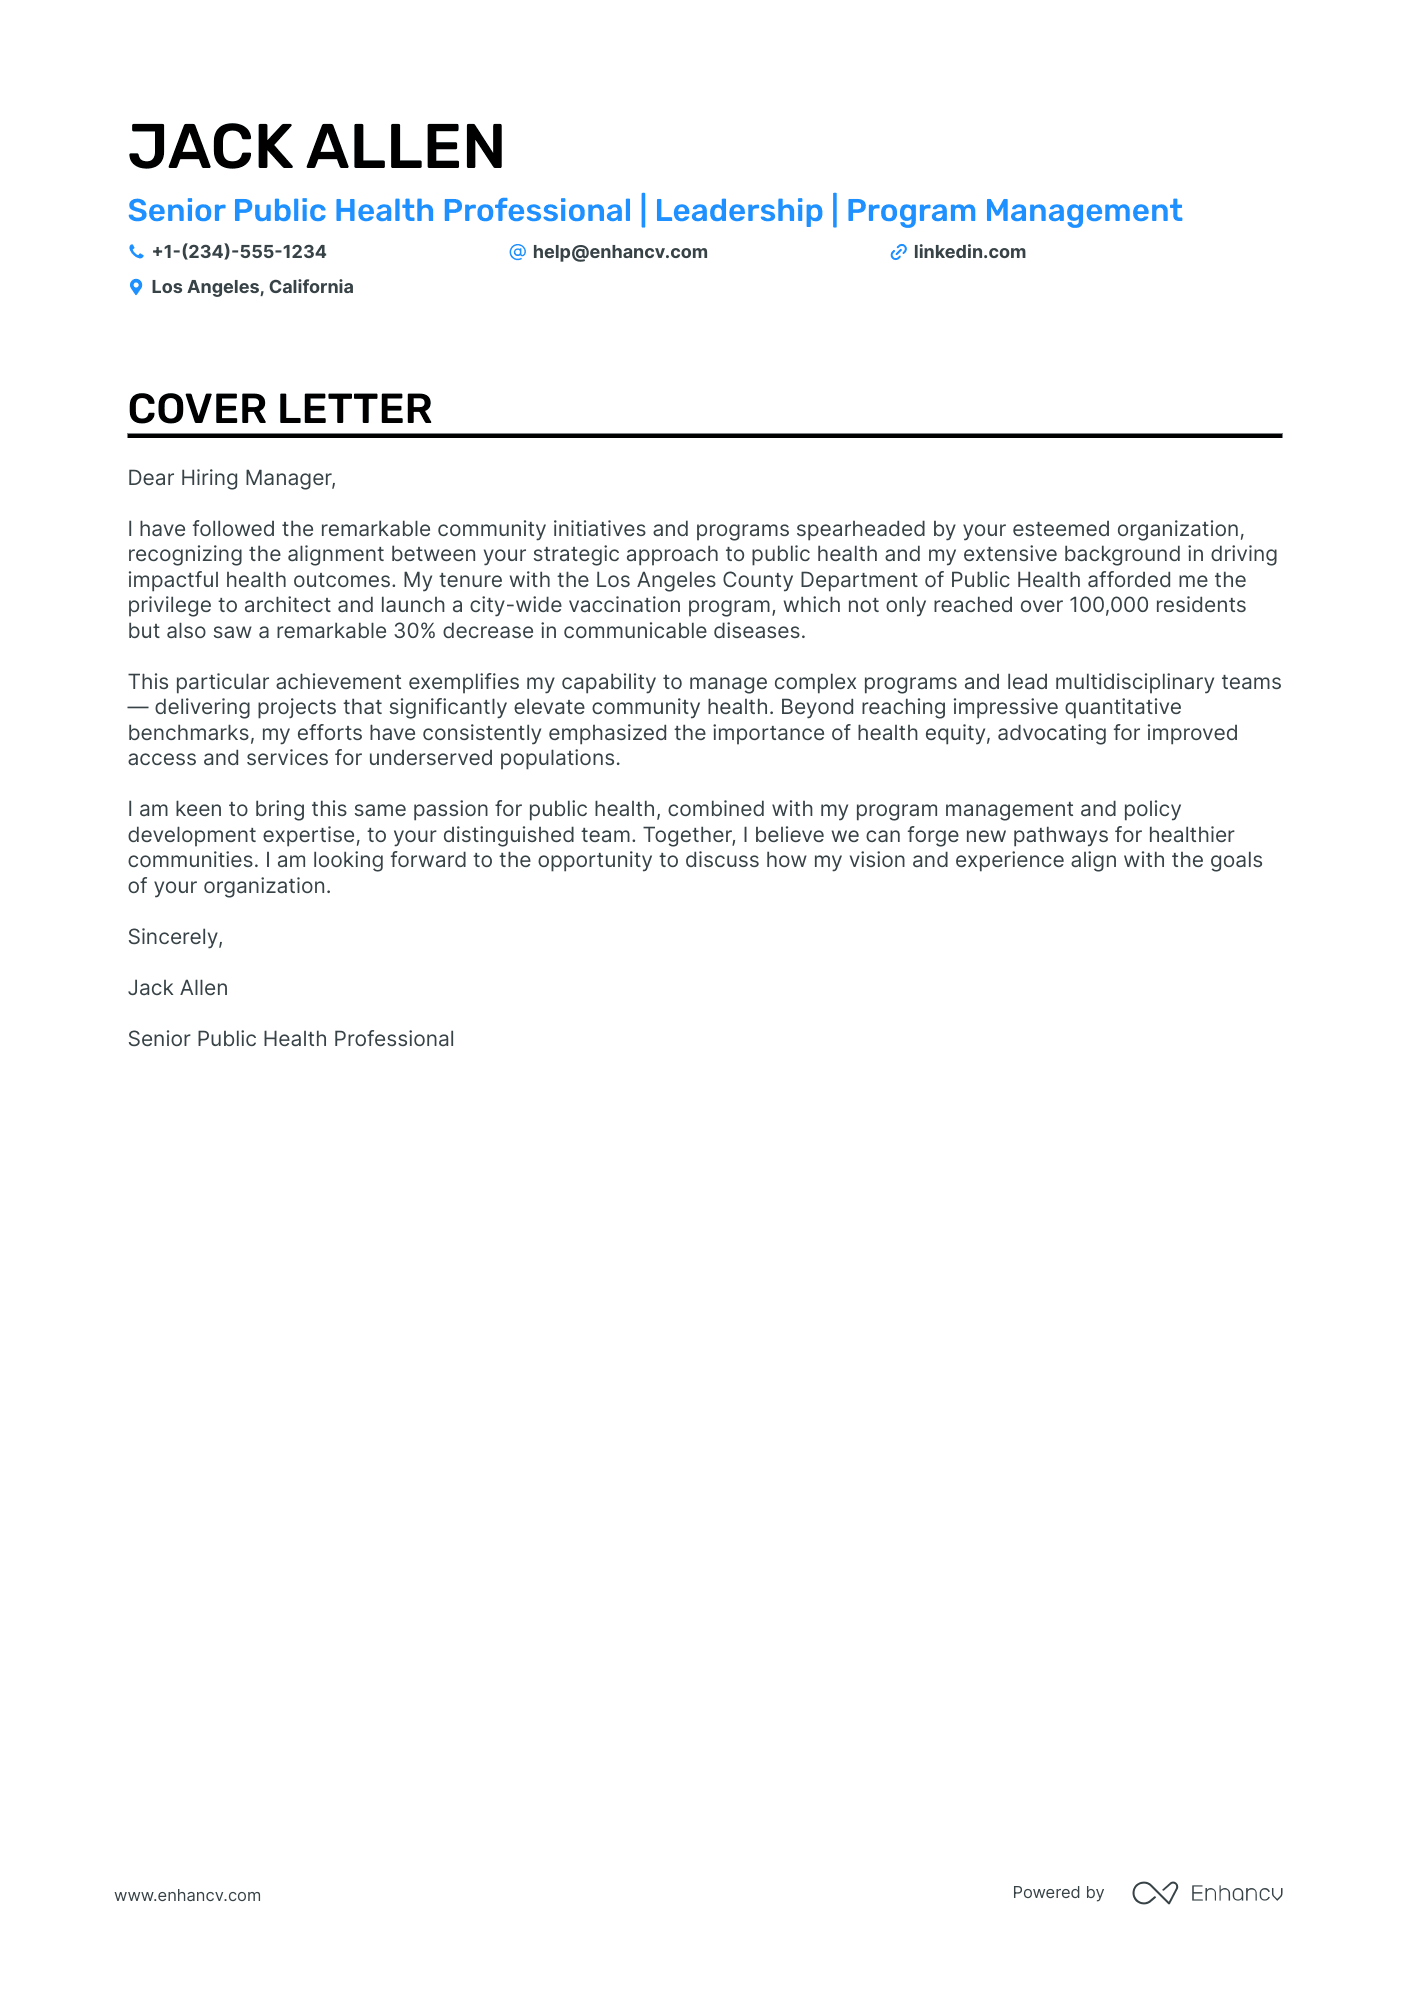 Public Health Program Manager cover letter